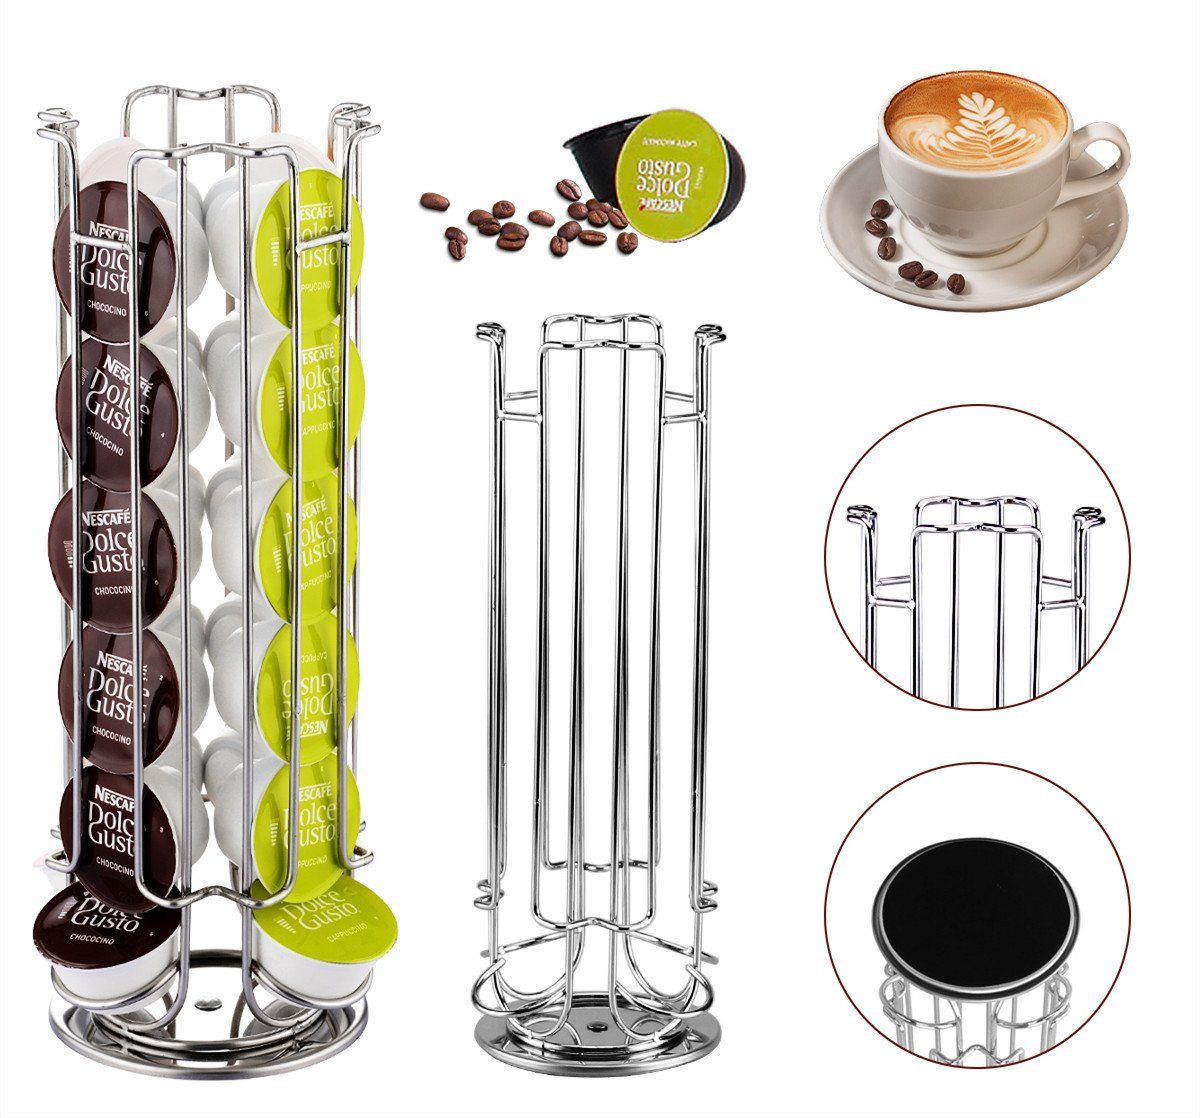 MULISOFT Kapselspender, Kaffeekapsel Halter für 24 Stück Nespresso/Dolce Gusto Kaffee Kapseln